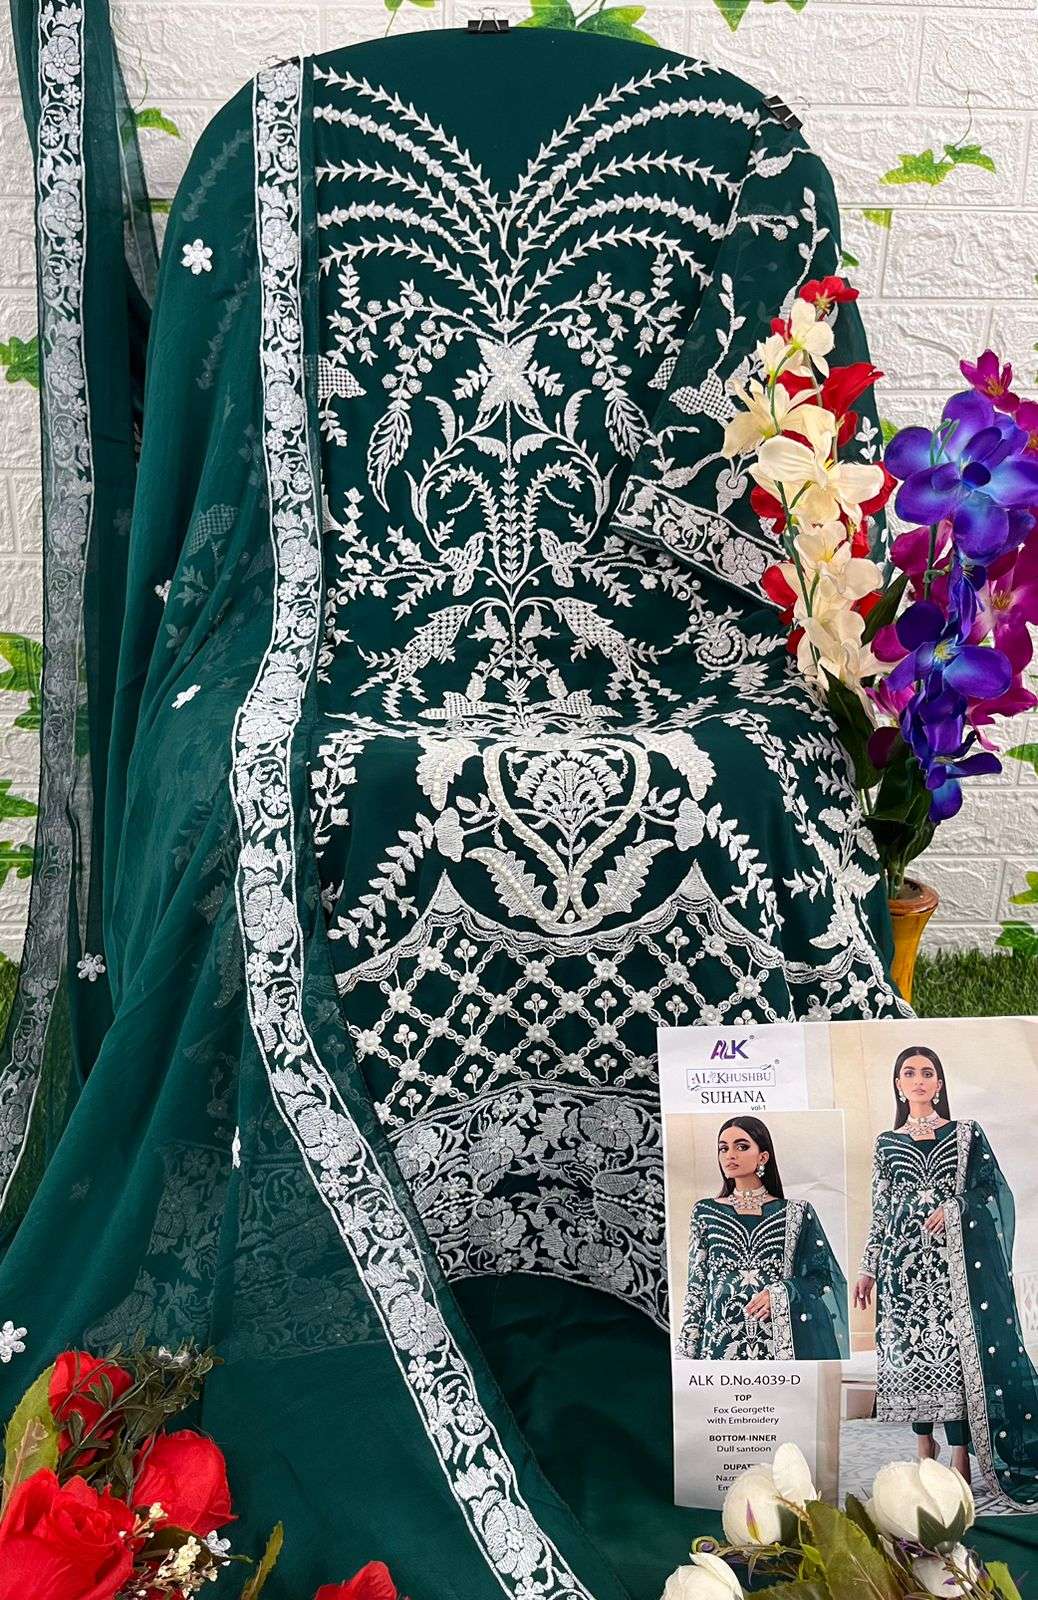 al khushbu suhana vol-1 4039 colours georgette embroidered salwar kameez wholesale price 